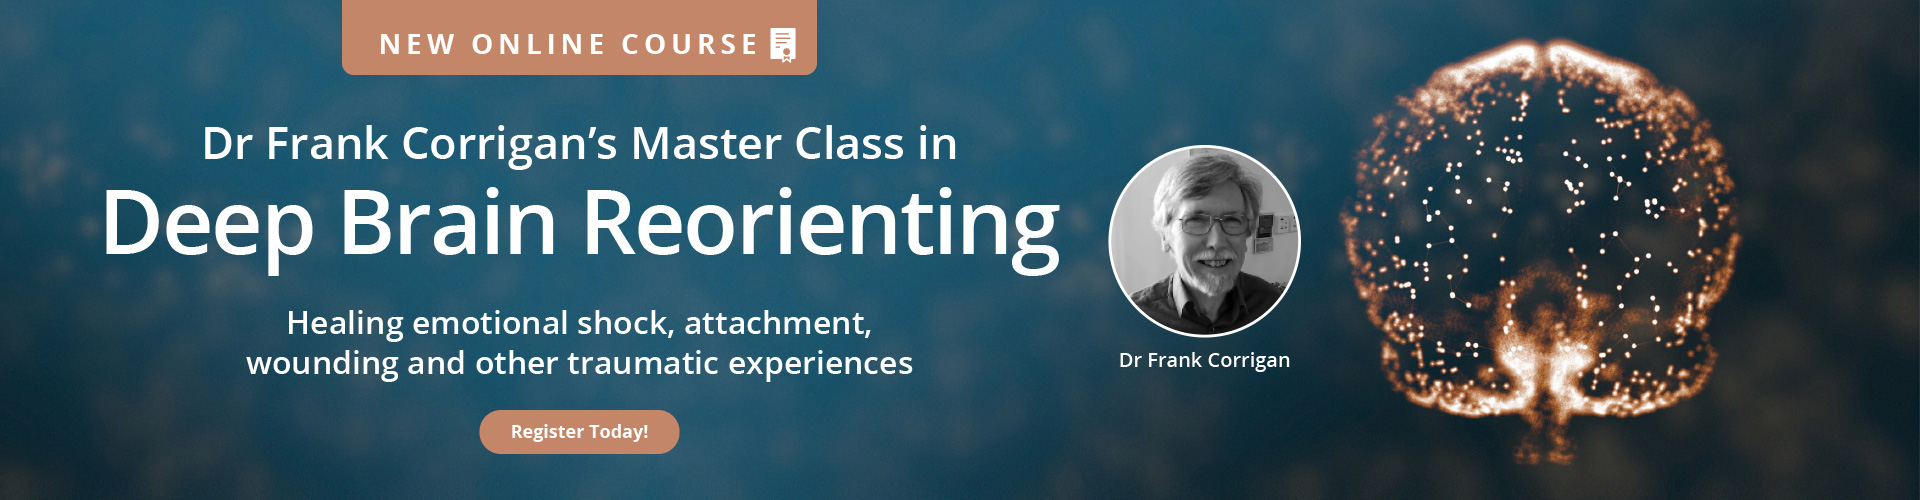 Dr. Frank Corrigan's Master Class in Deep Brain Reorienting